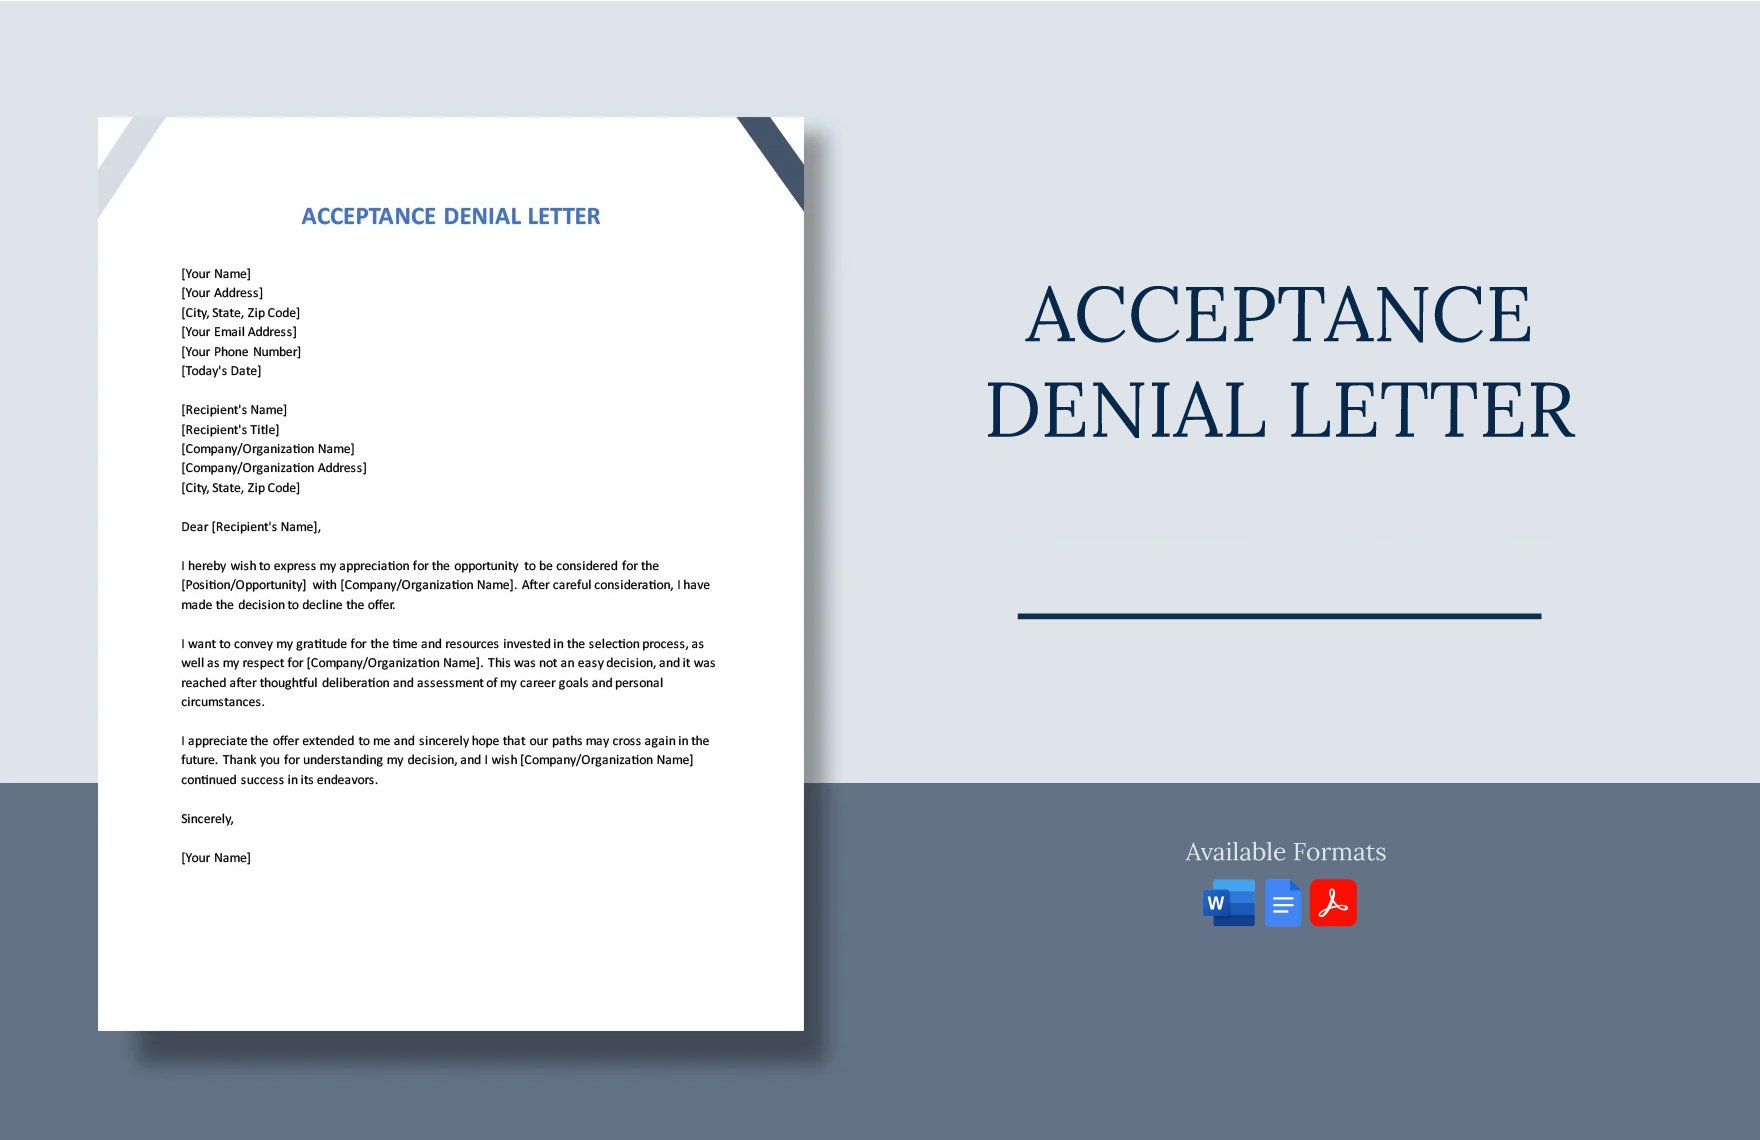 Acceptance Denial Letter in Word, Google Docs, PDF